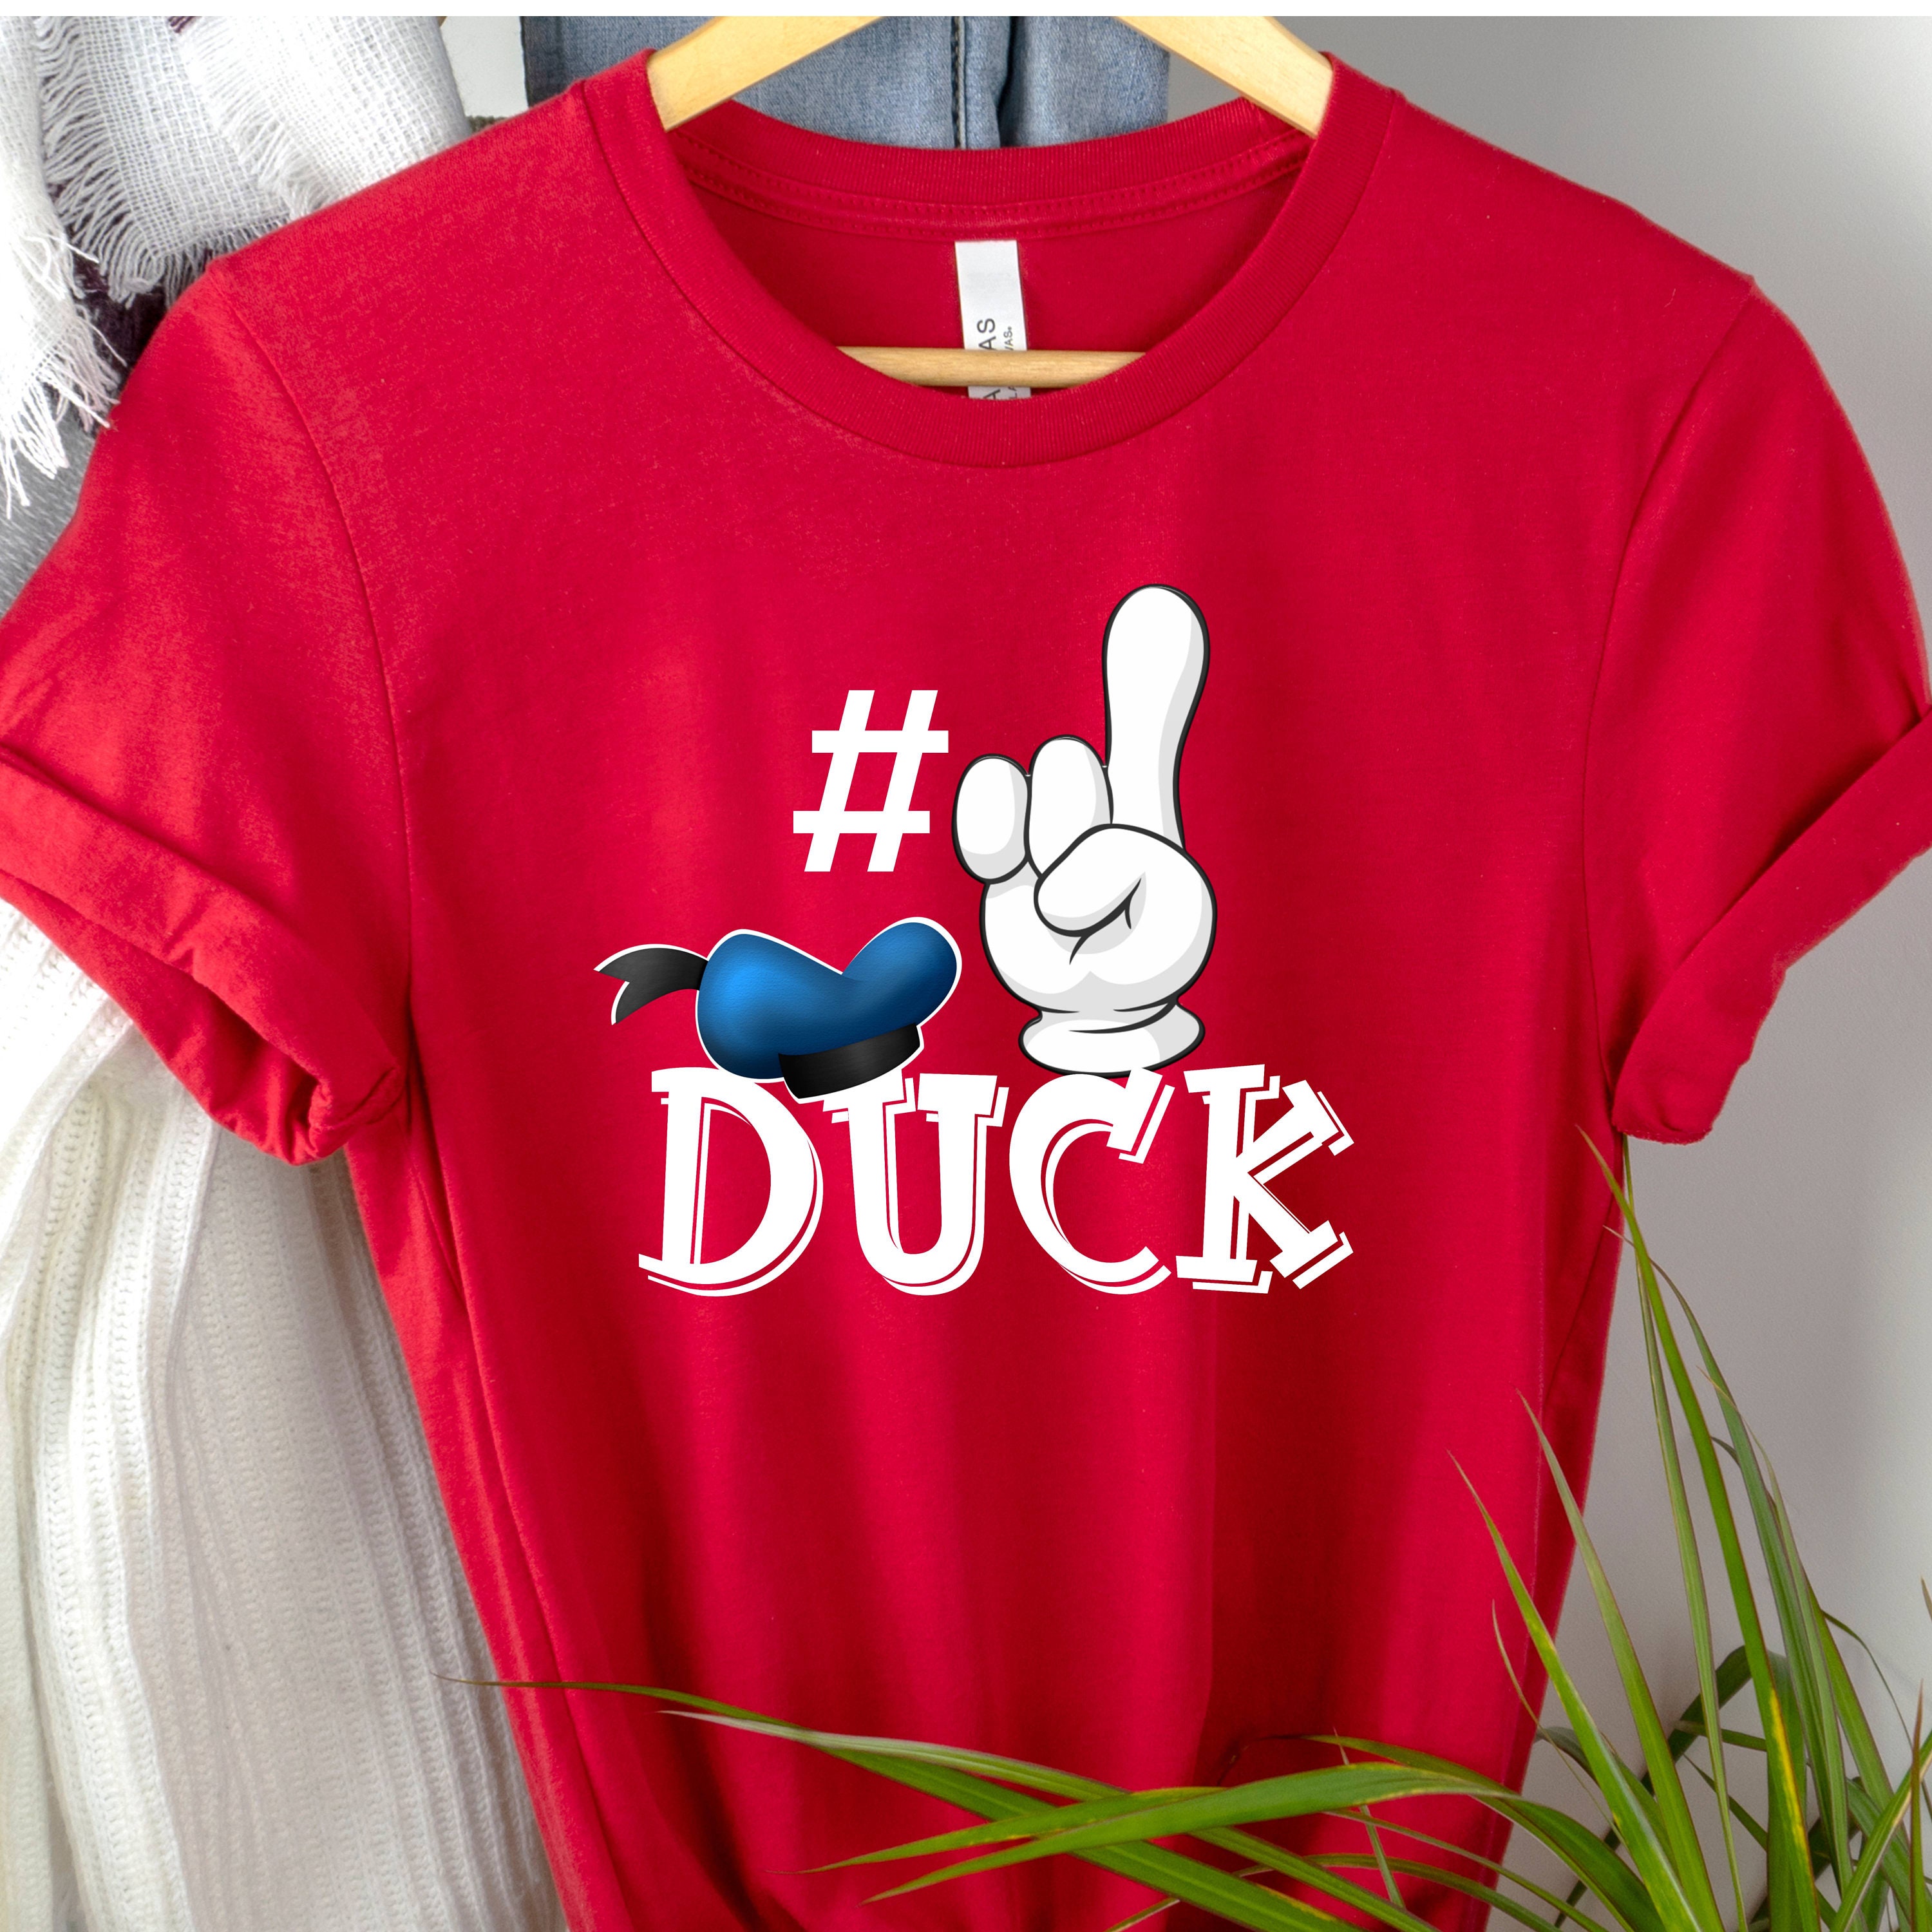 lets trip duck shirt